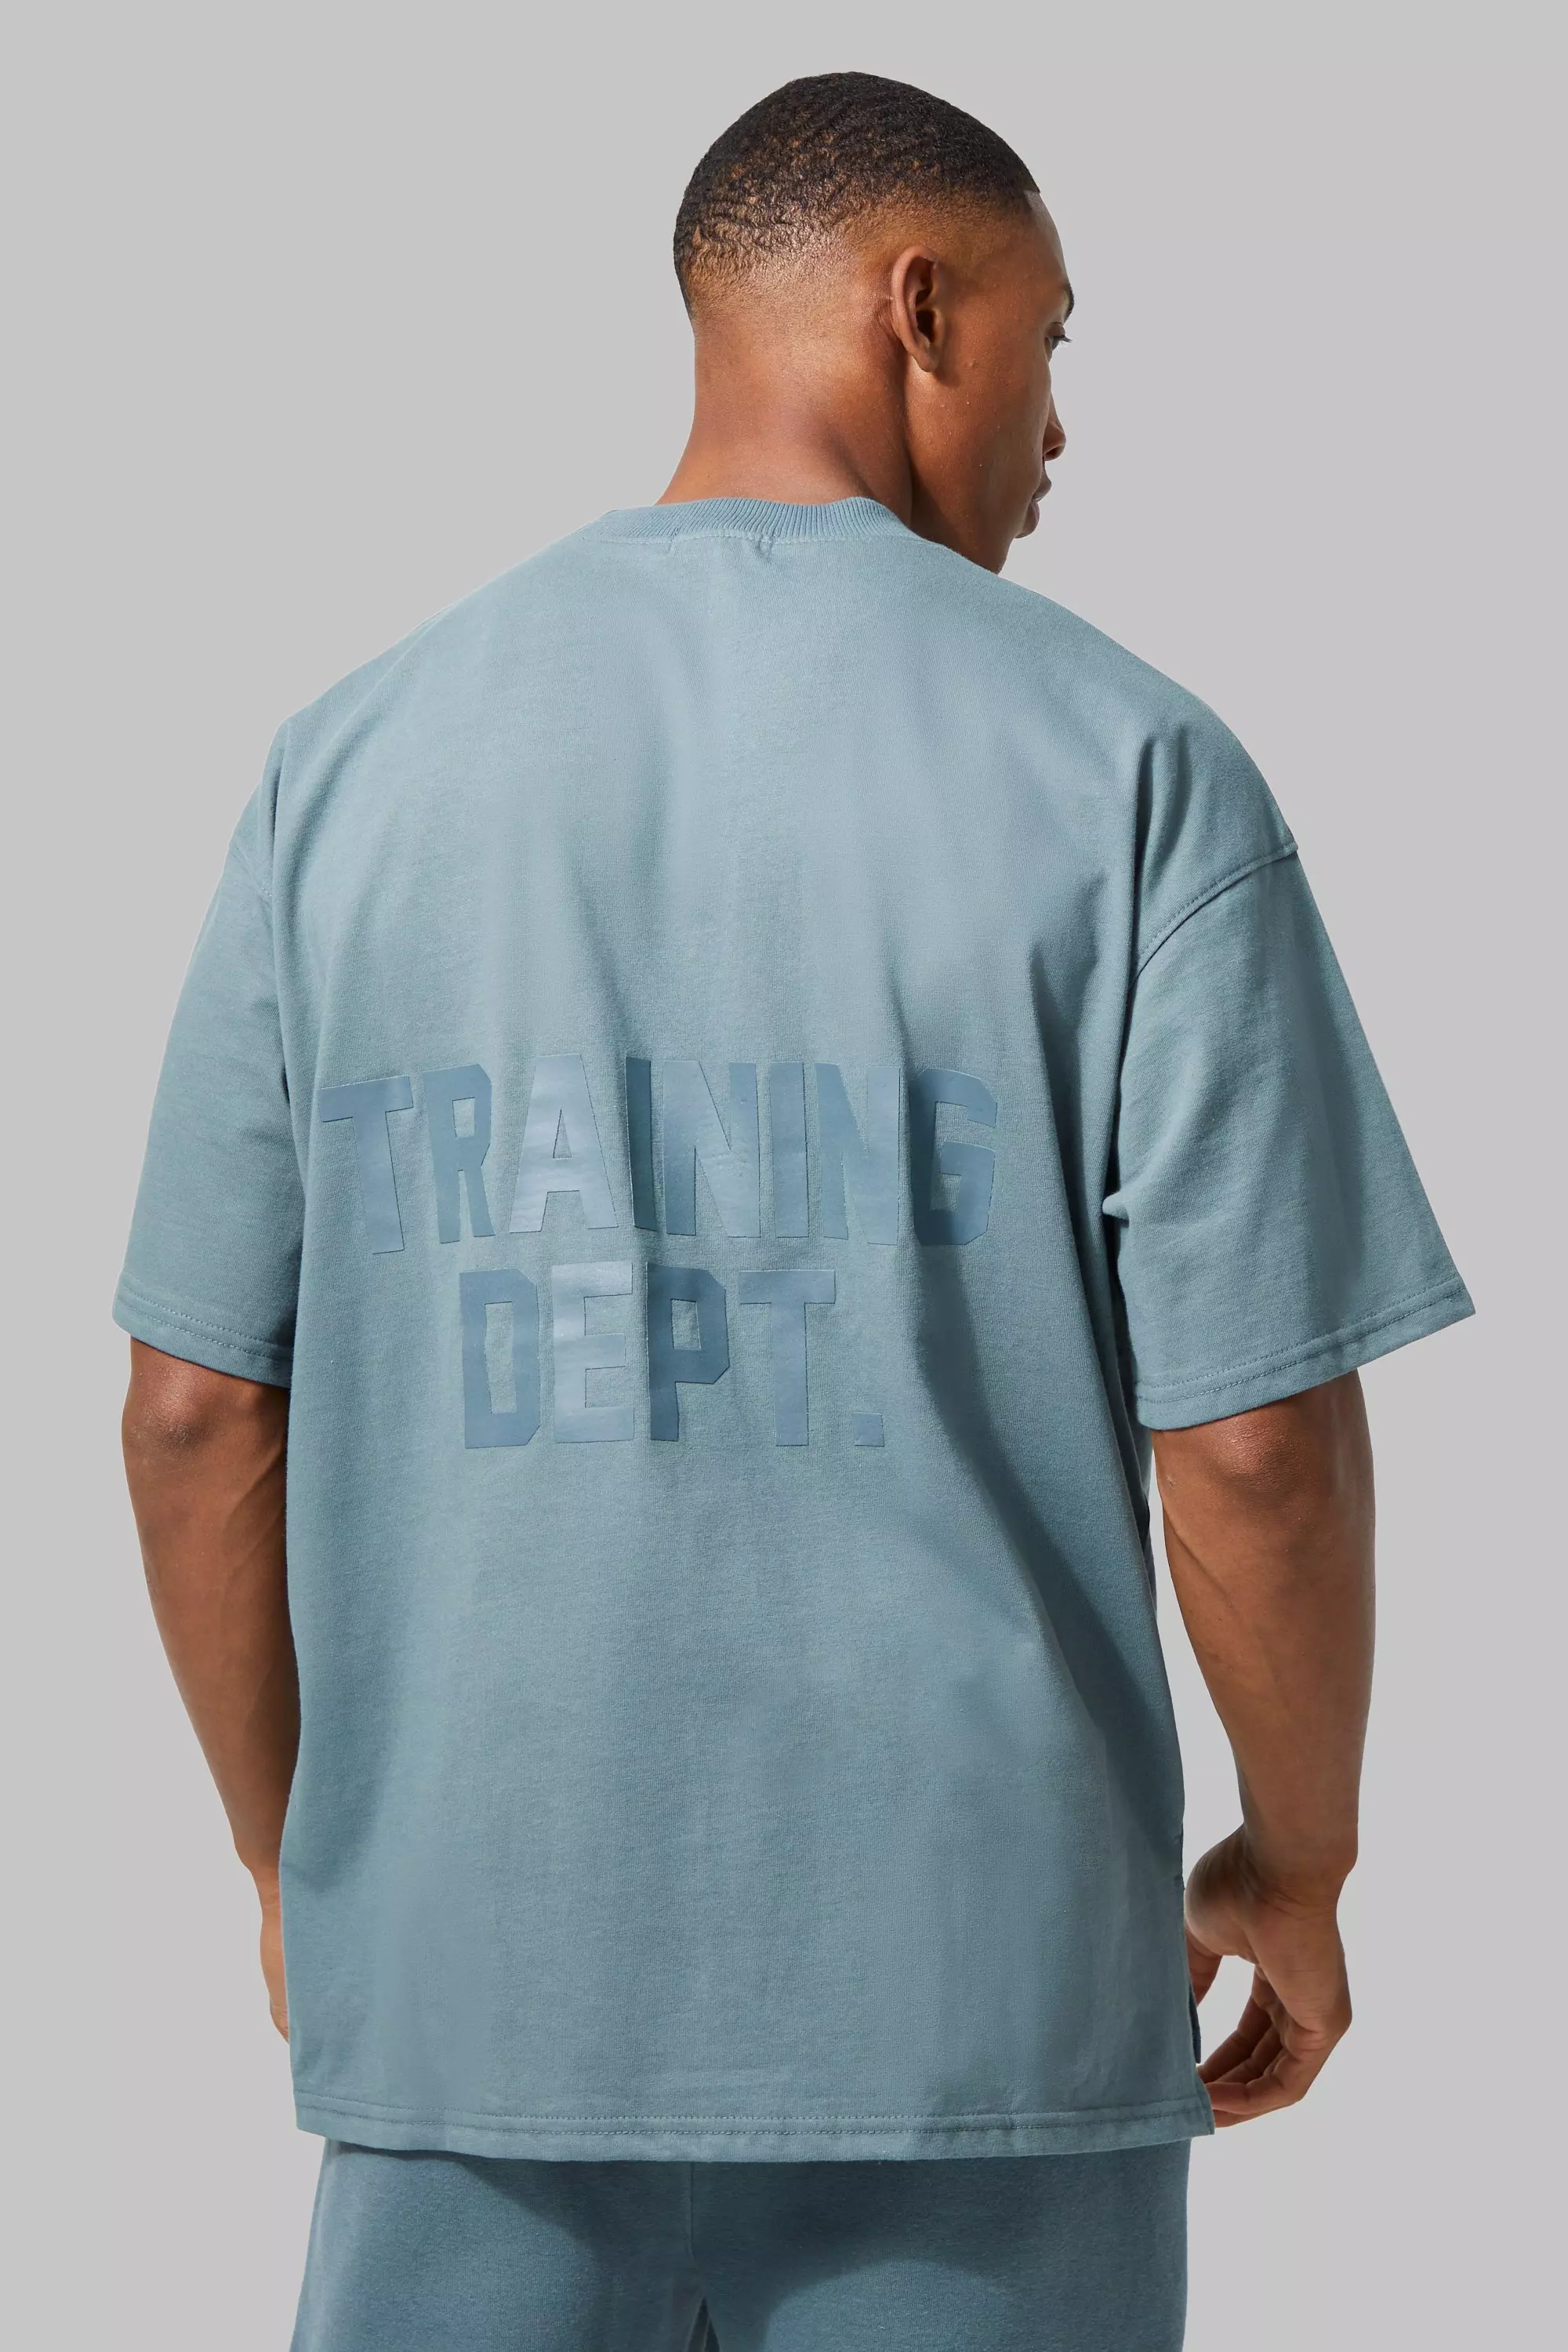 Active Training Dept Oversized T-shirt slate blue